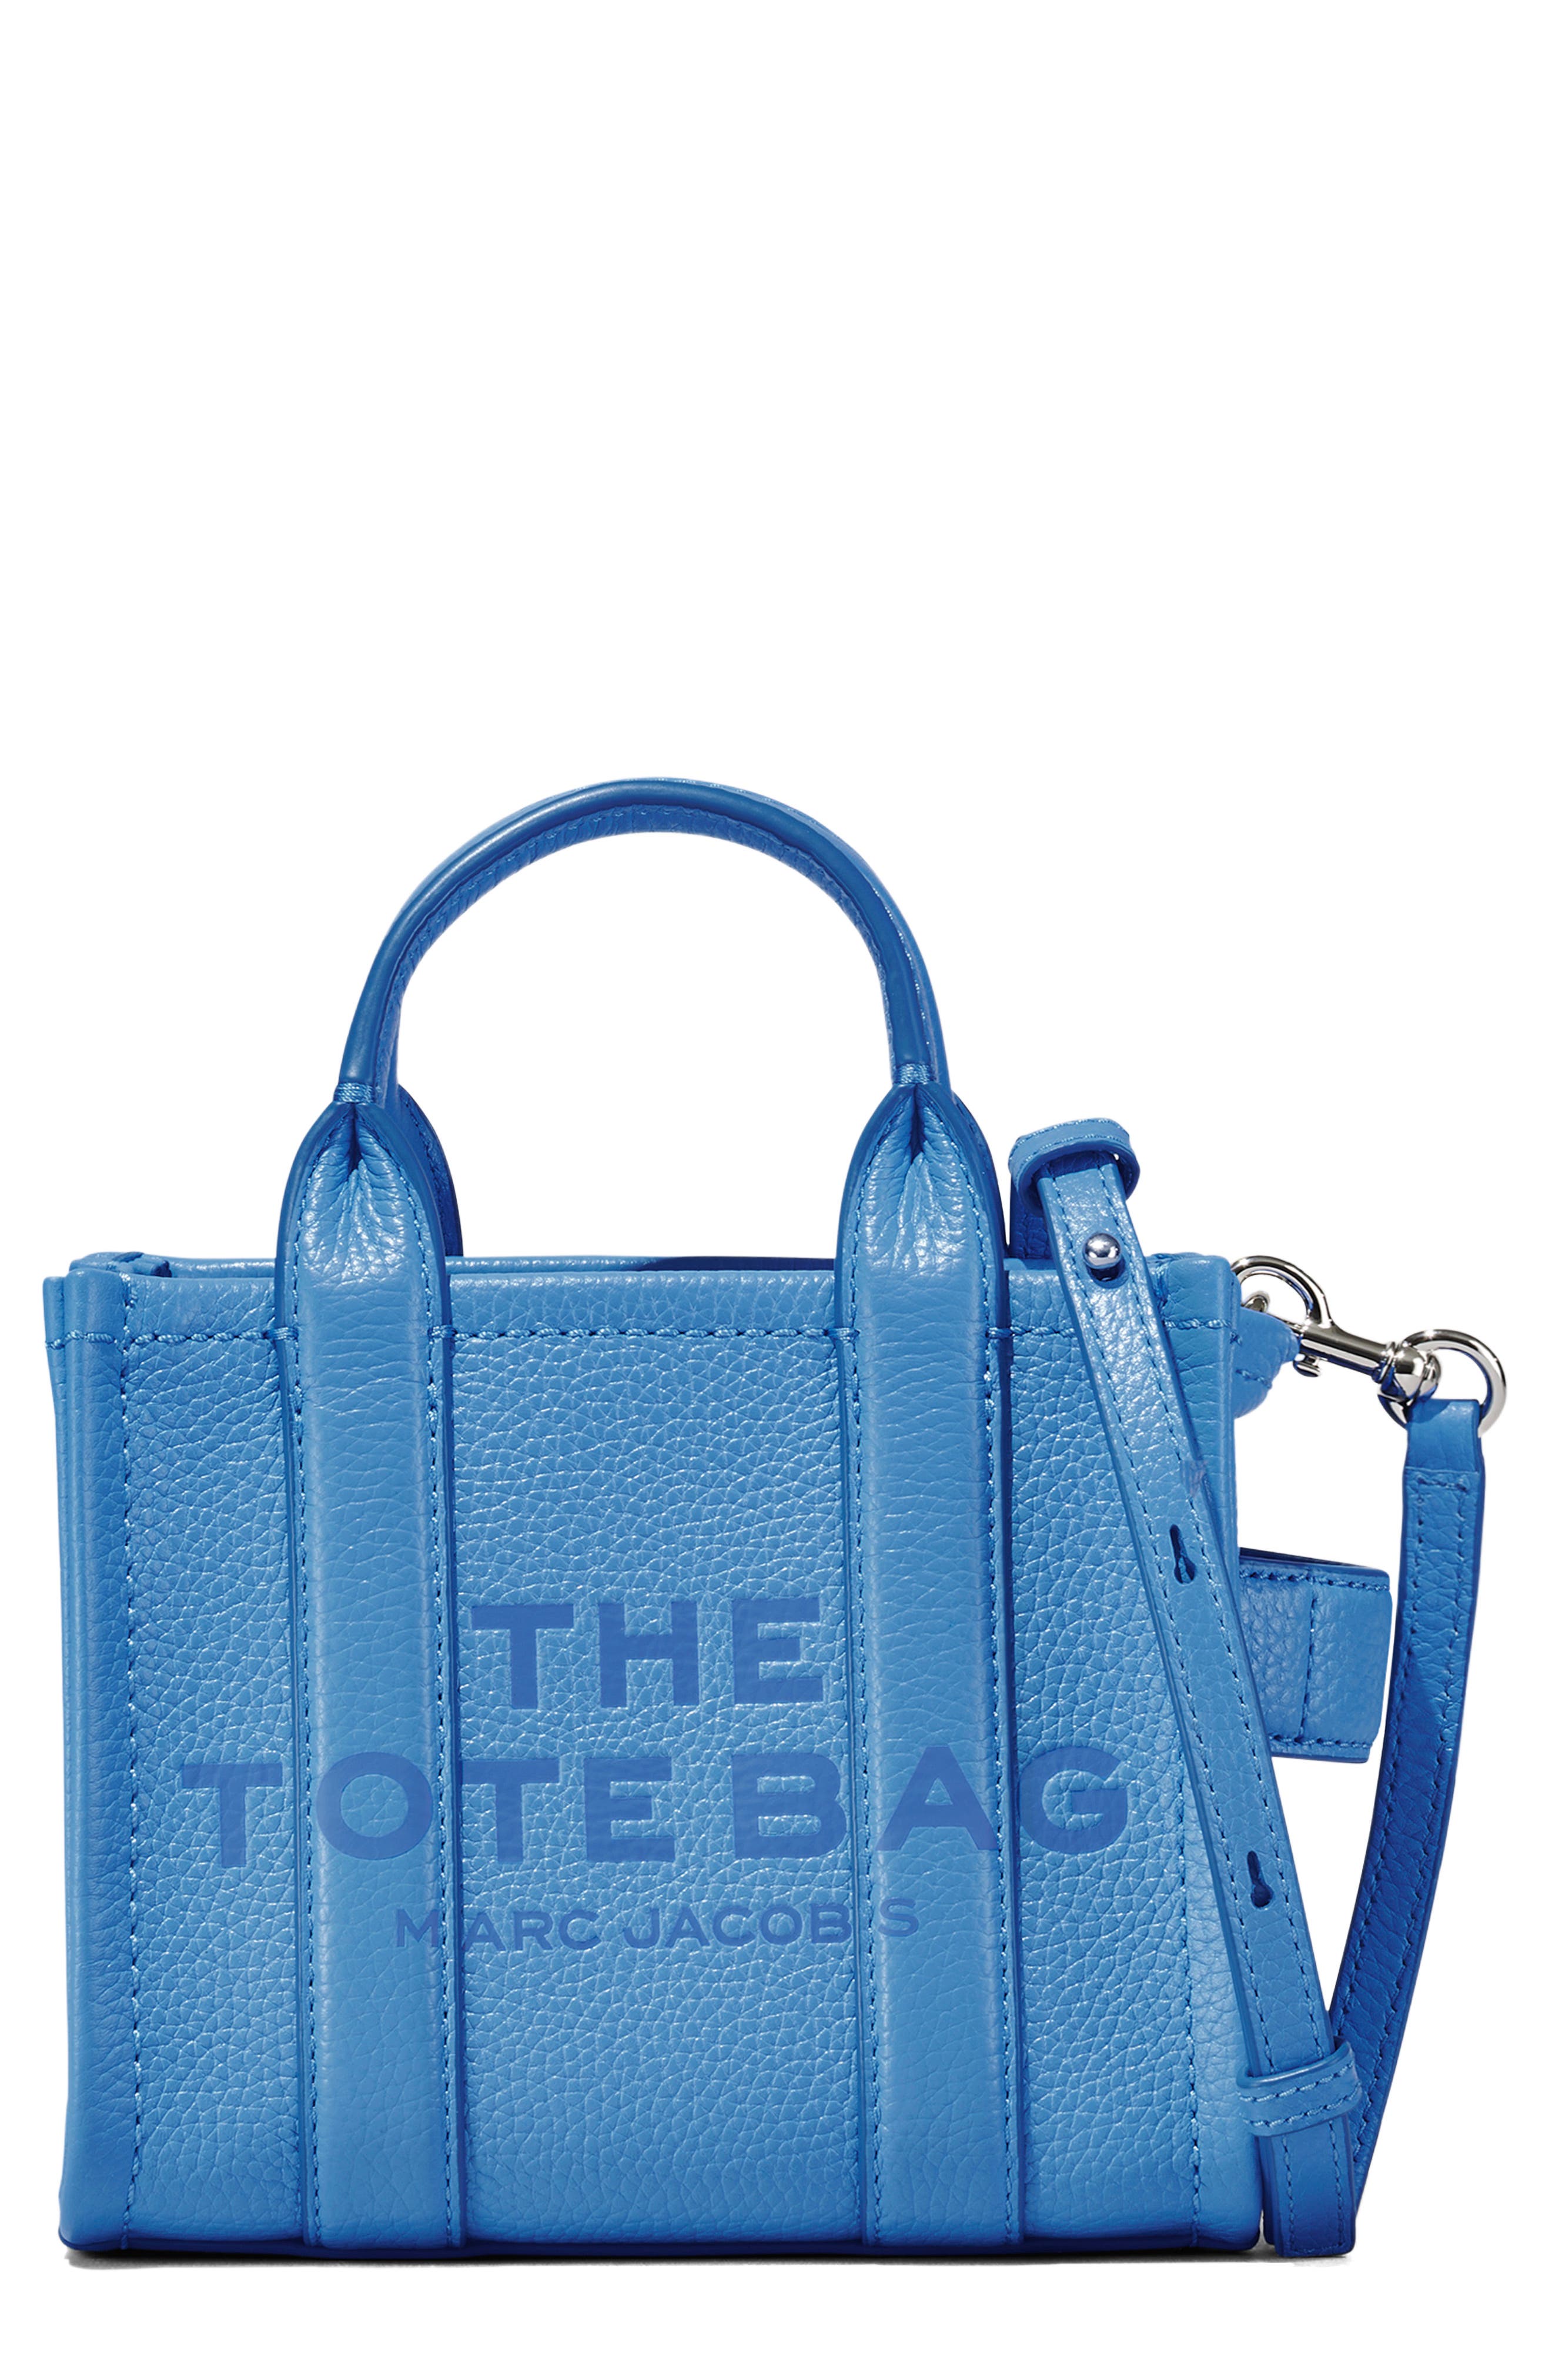 Marc Jacobs Blue 'The Snapshot' Bag